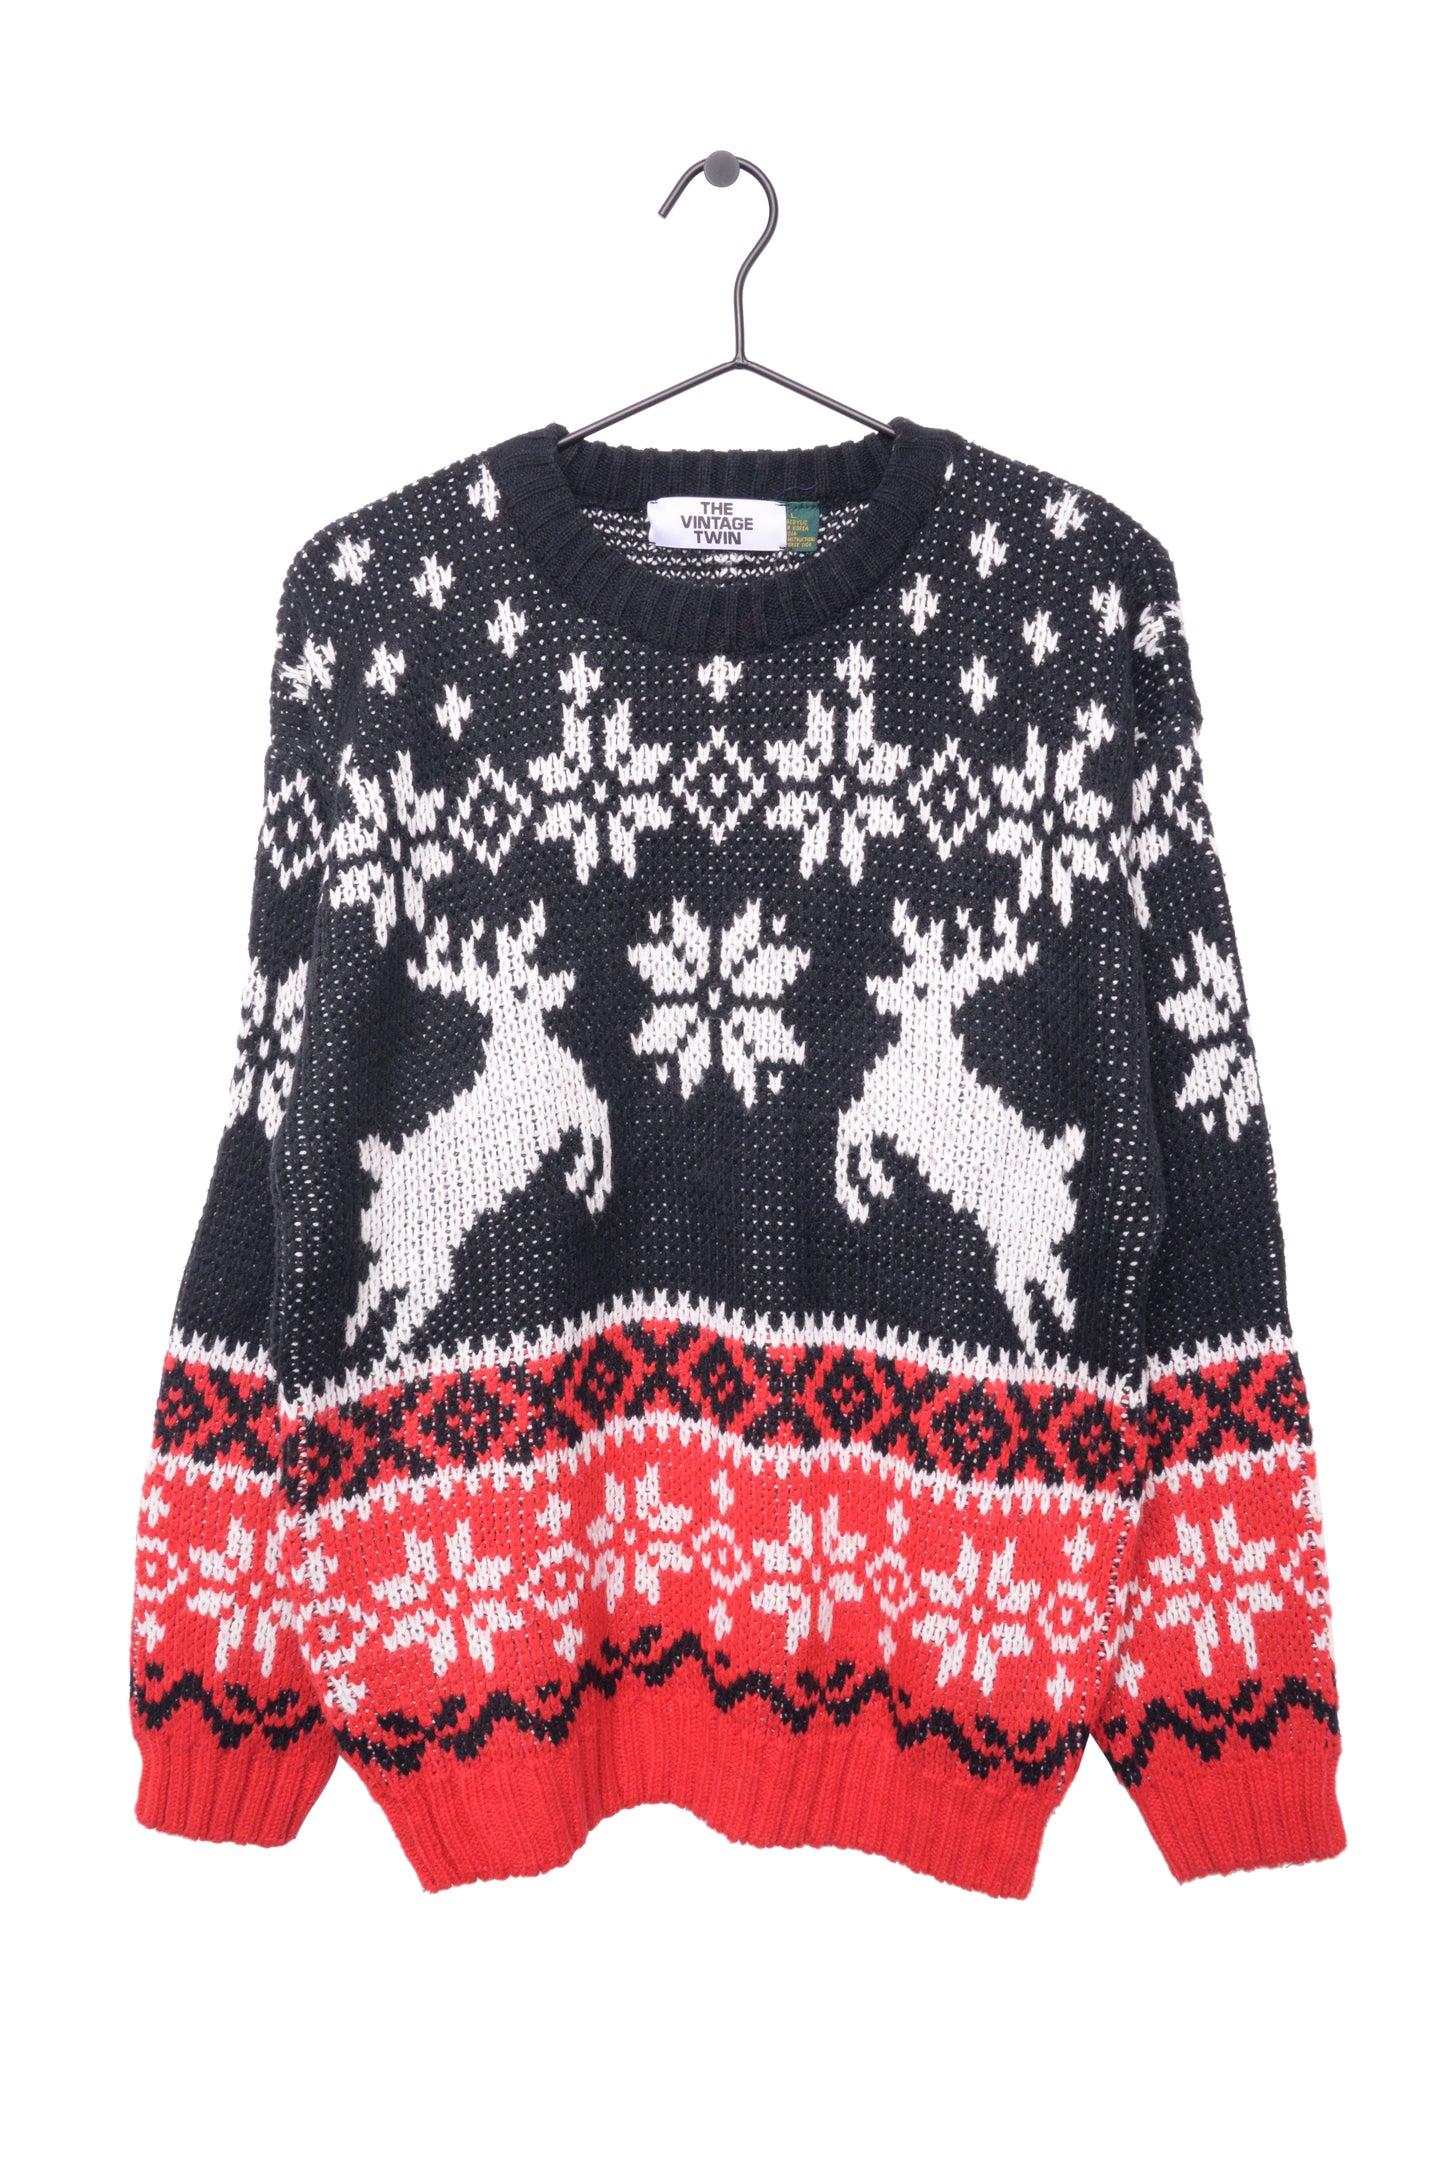 Reindeer Holiday Sweater